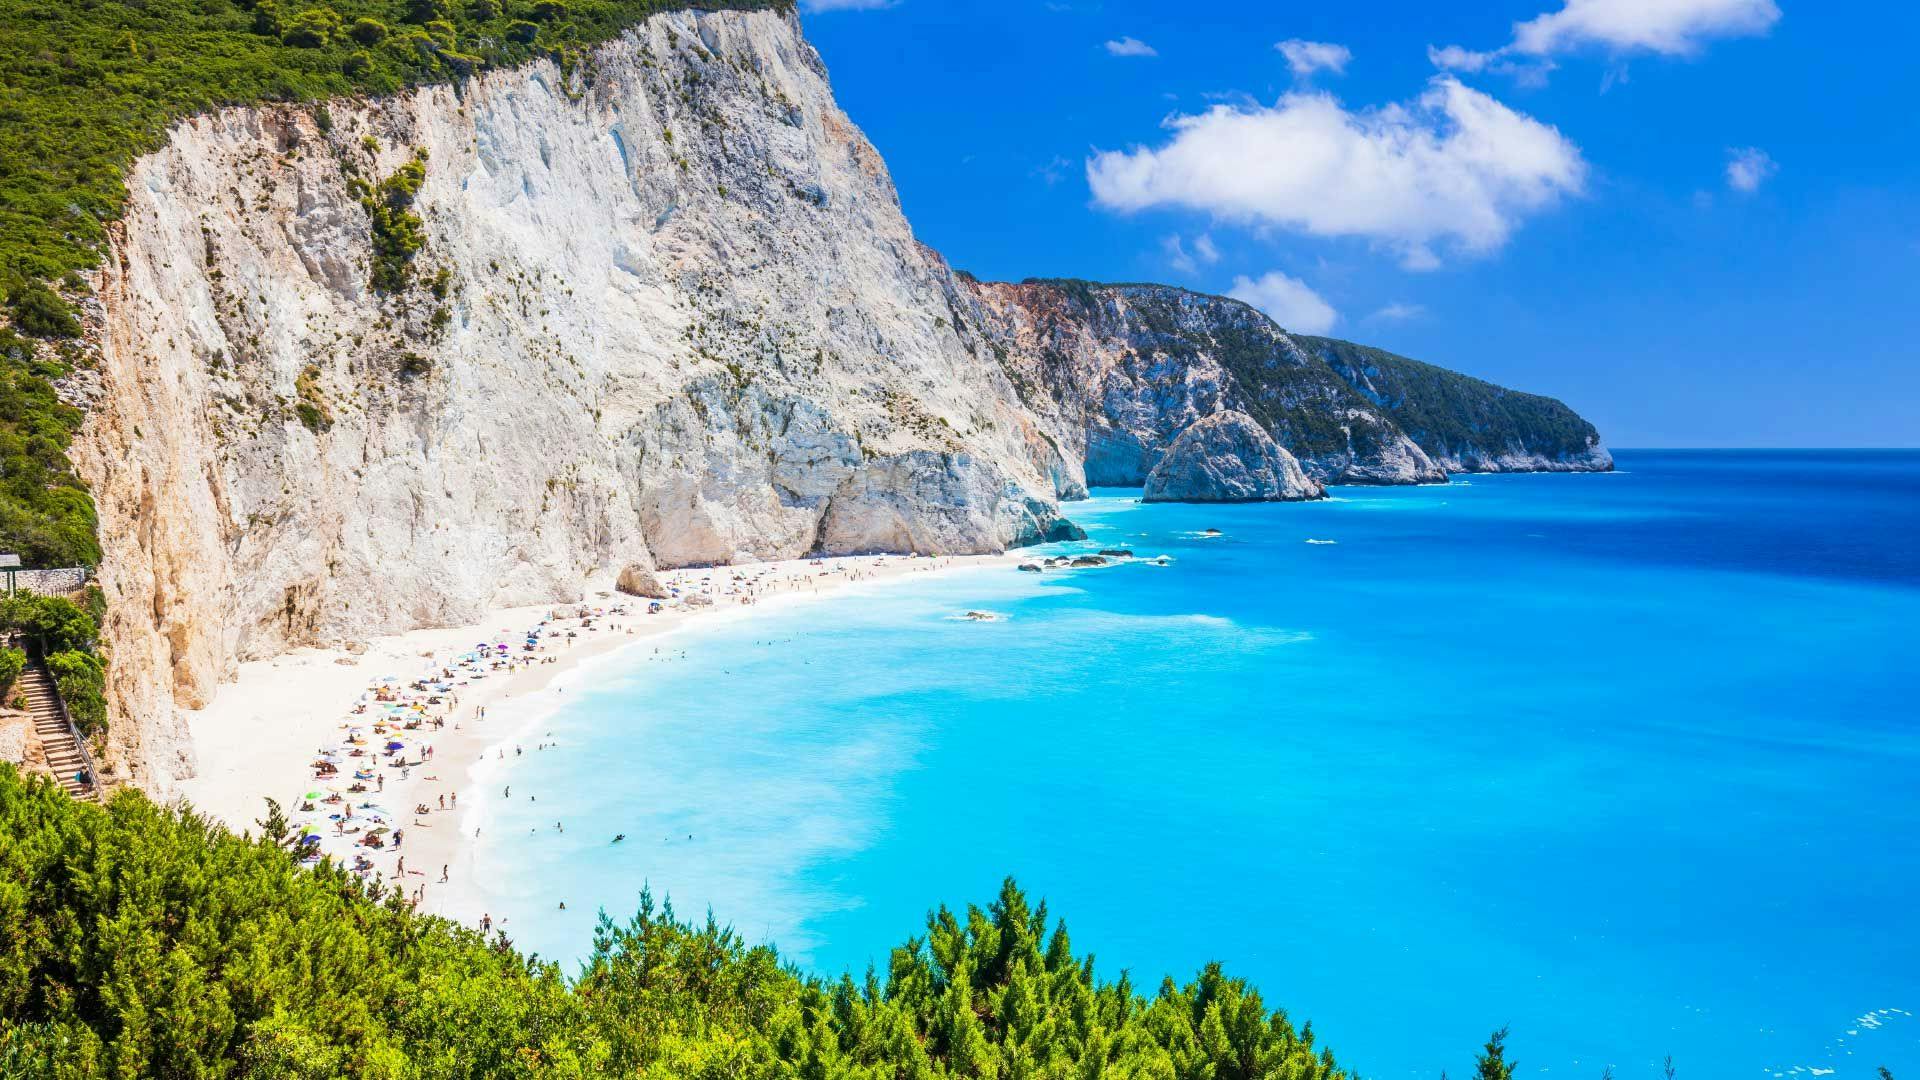 Lefkada beach in Greece